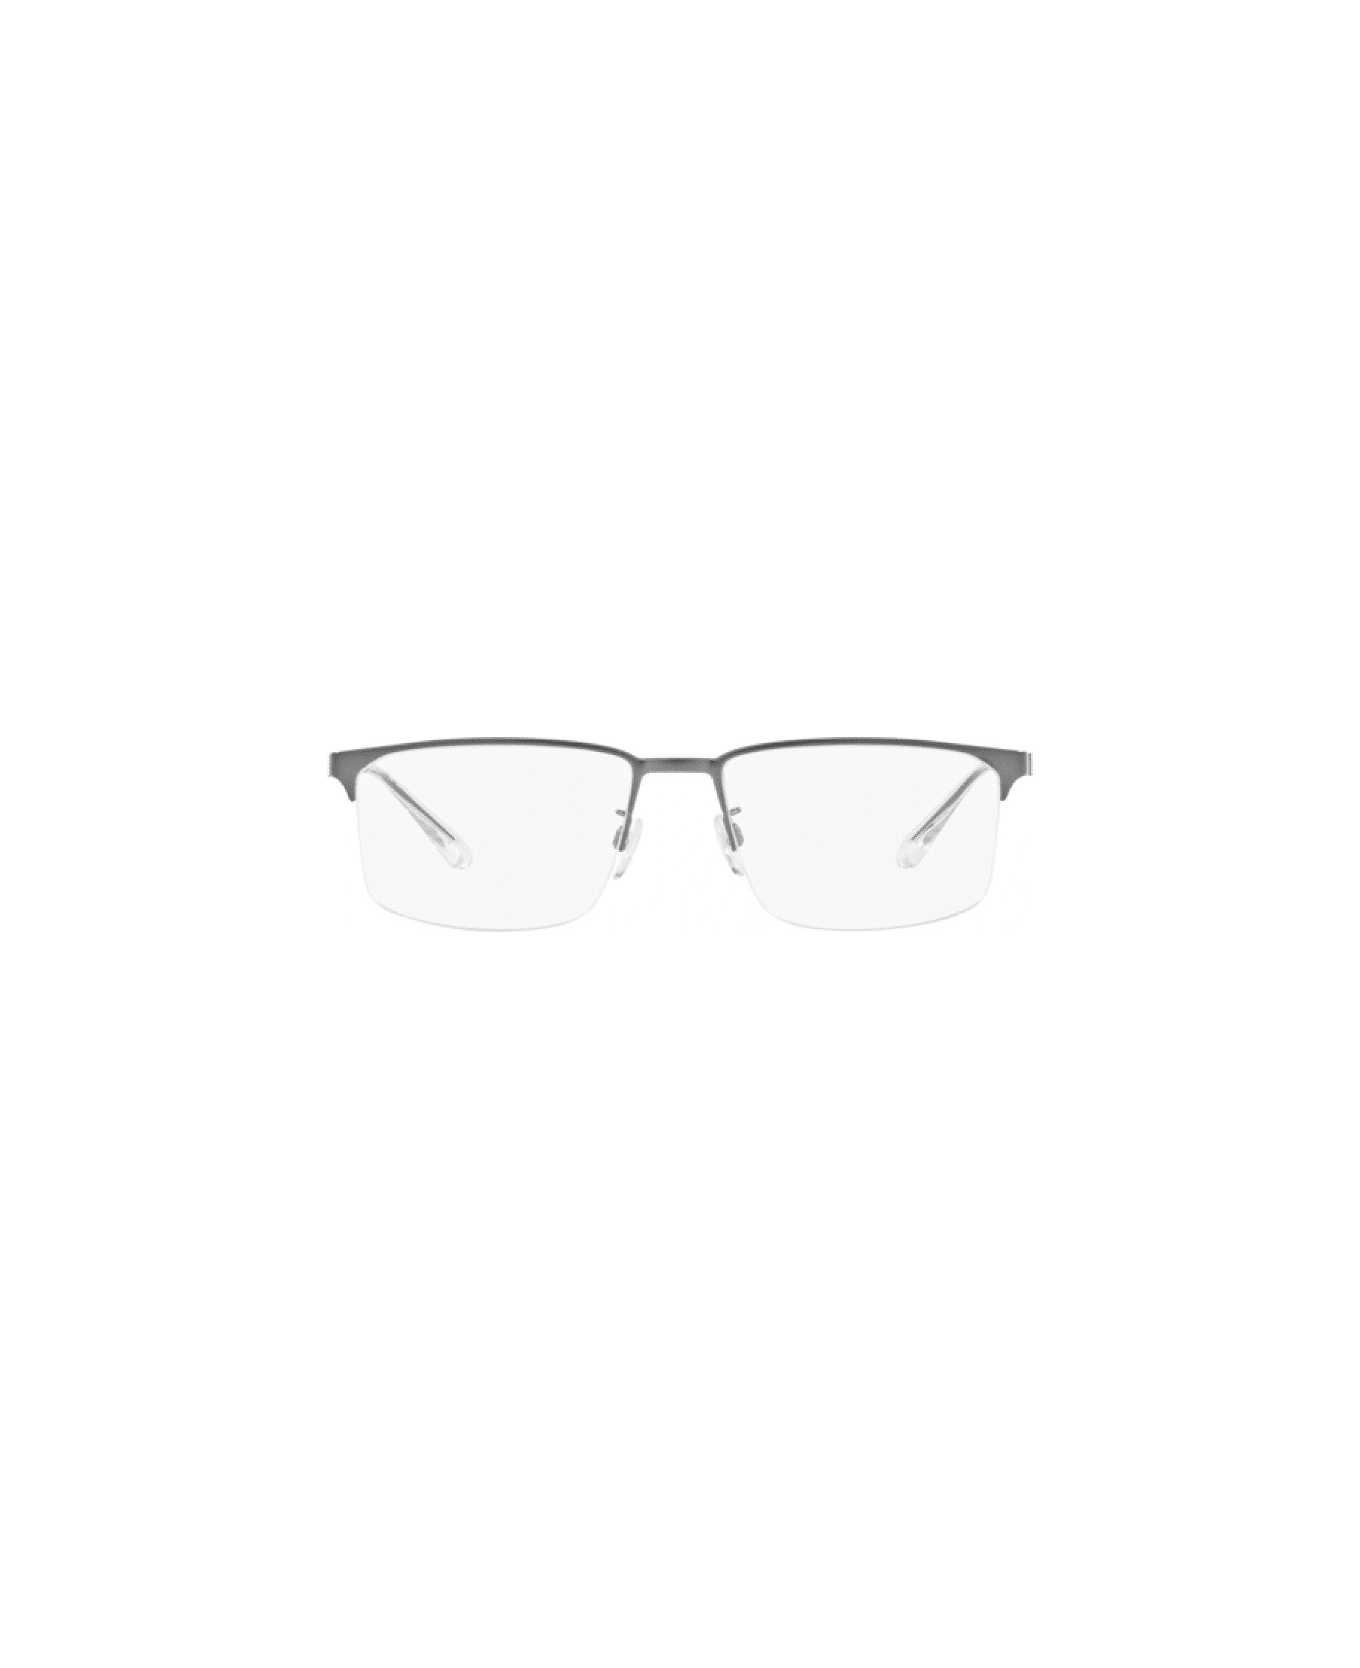 Emporio Armani EA1143 3003 Glasses アイウェア